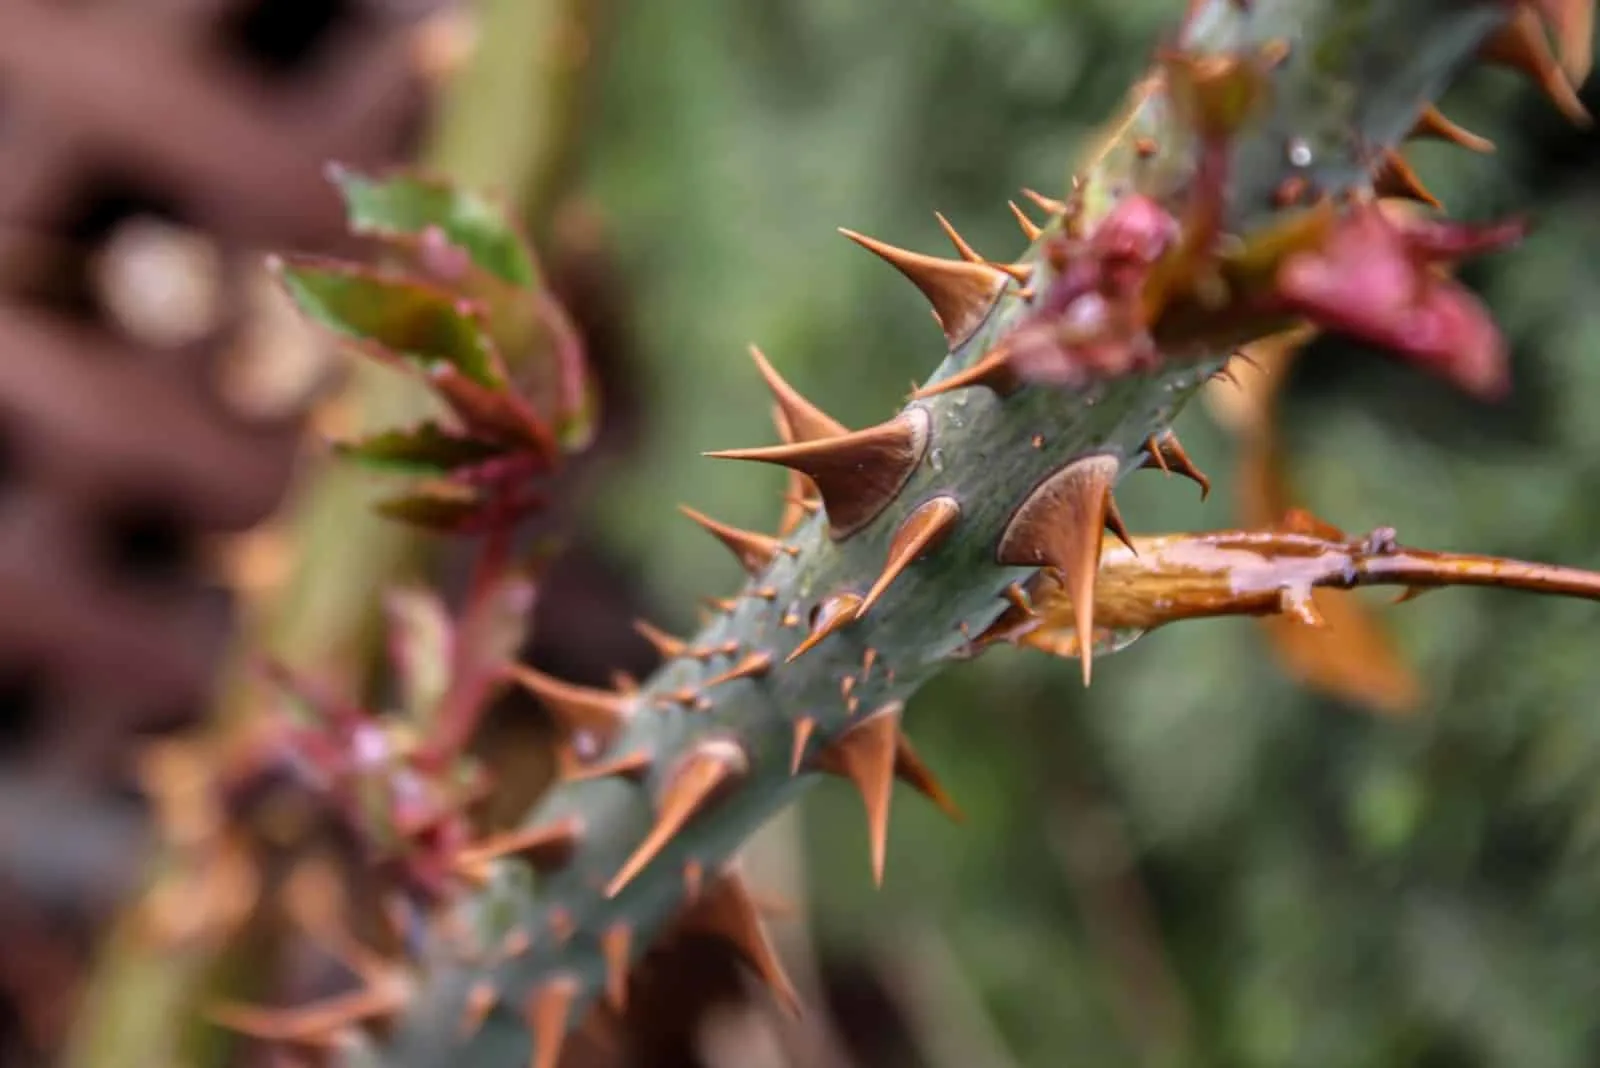 Closeup of rose thorn stem